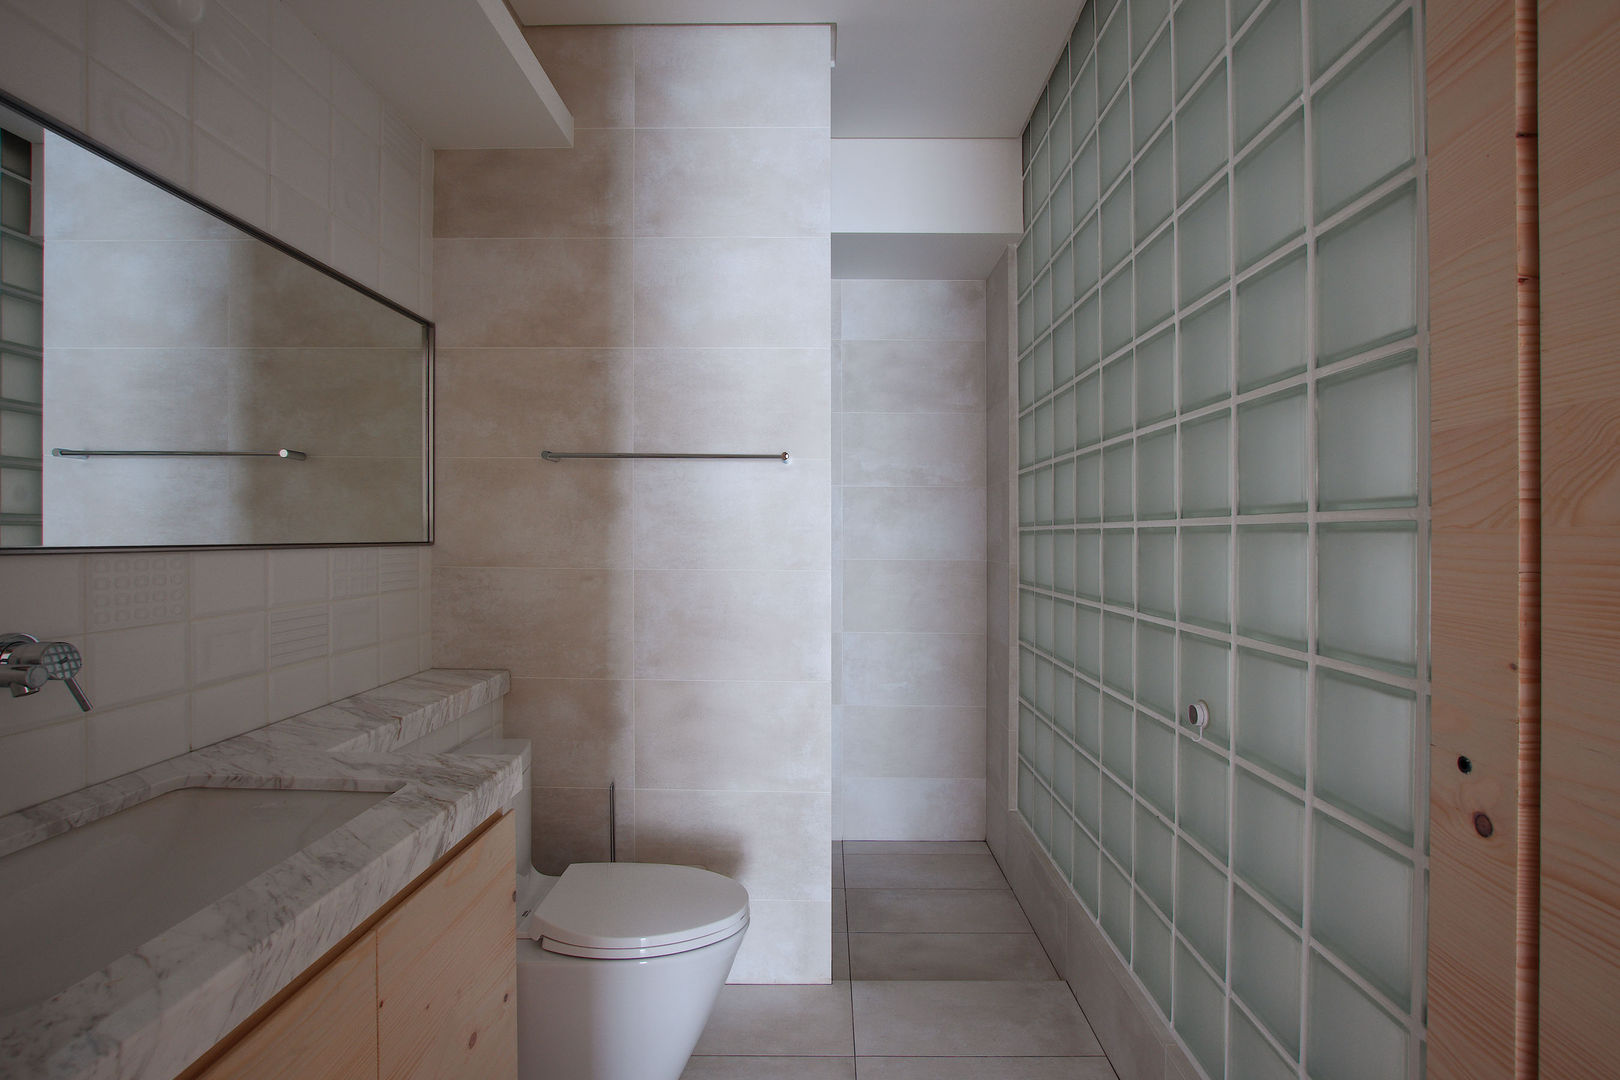 Childlike - House M, 六相設計 Phase6 六相設計 Phase6 浴室 透光,玻璃磚,玻璃隔間,乾濕分離,對外窗